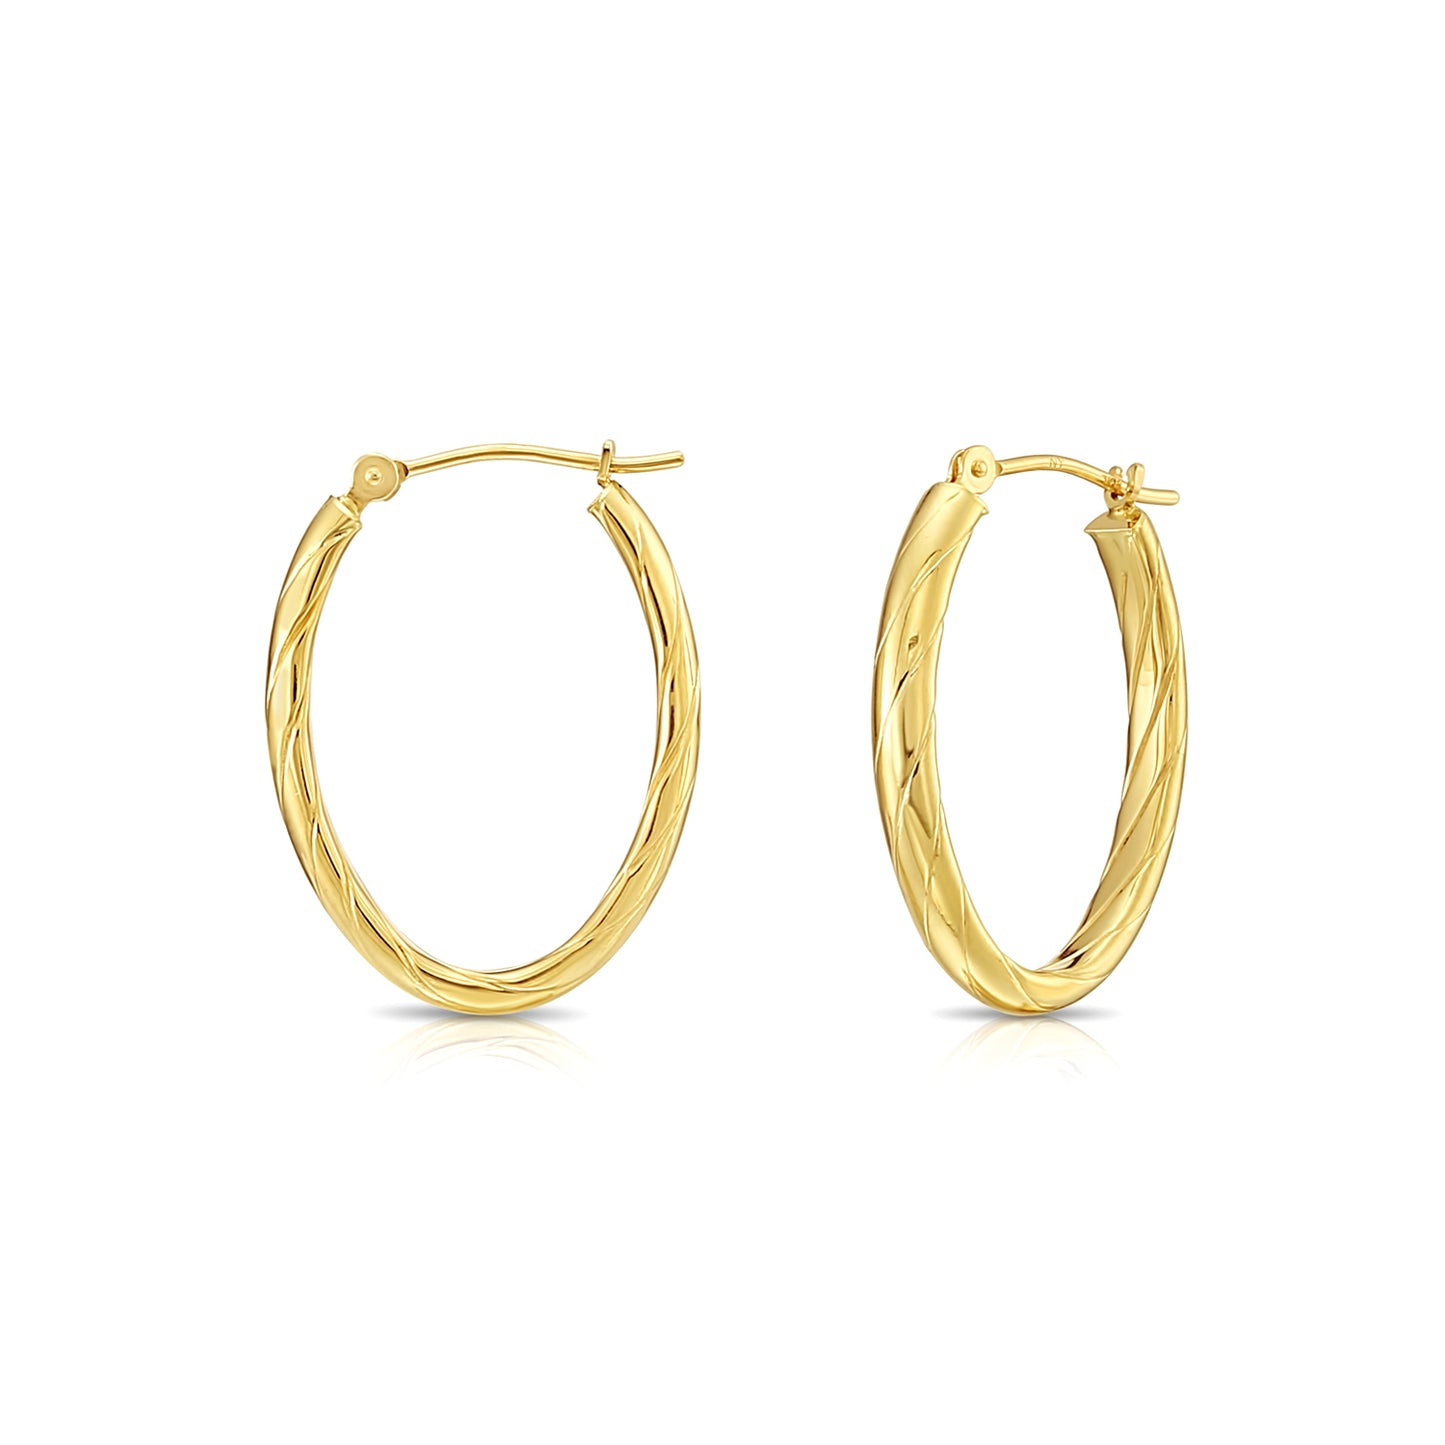 14k Yellow Gold Spiral Oval Hoop Earrings